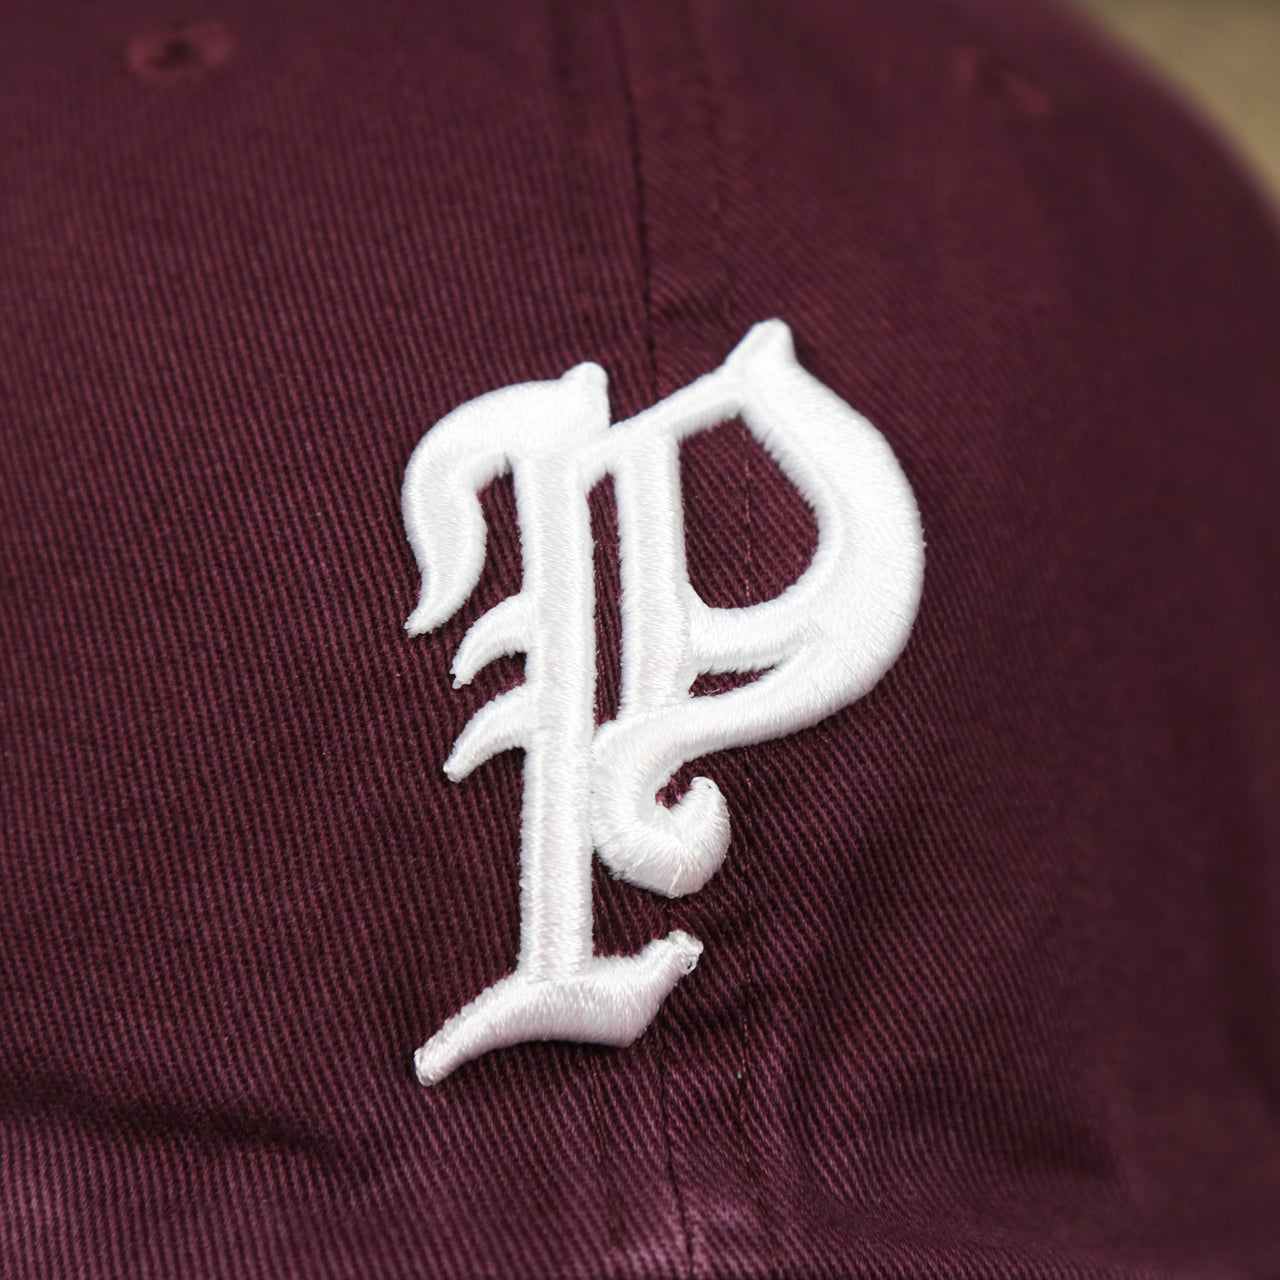 The Phillies Logo on the Cooperstown Philadelphia Phillies Vintage 1910s Phillies Logo Dad Hat | Dark Maroon Dad Hat